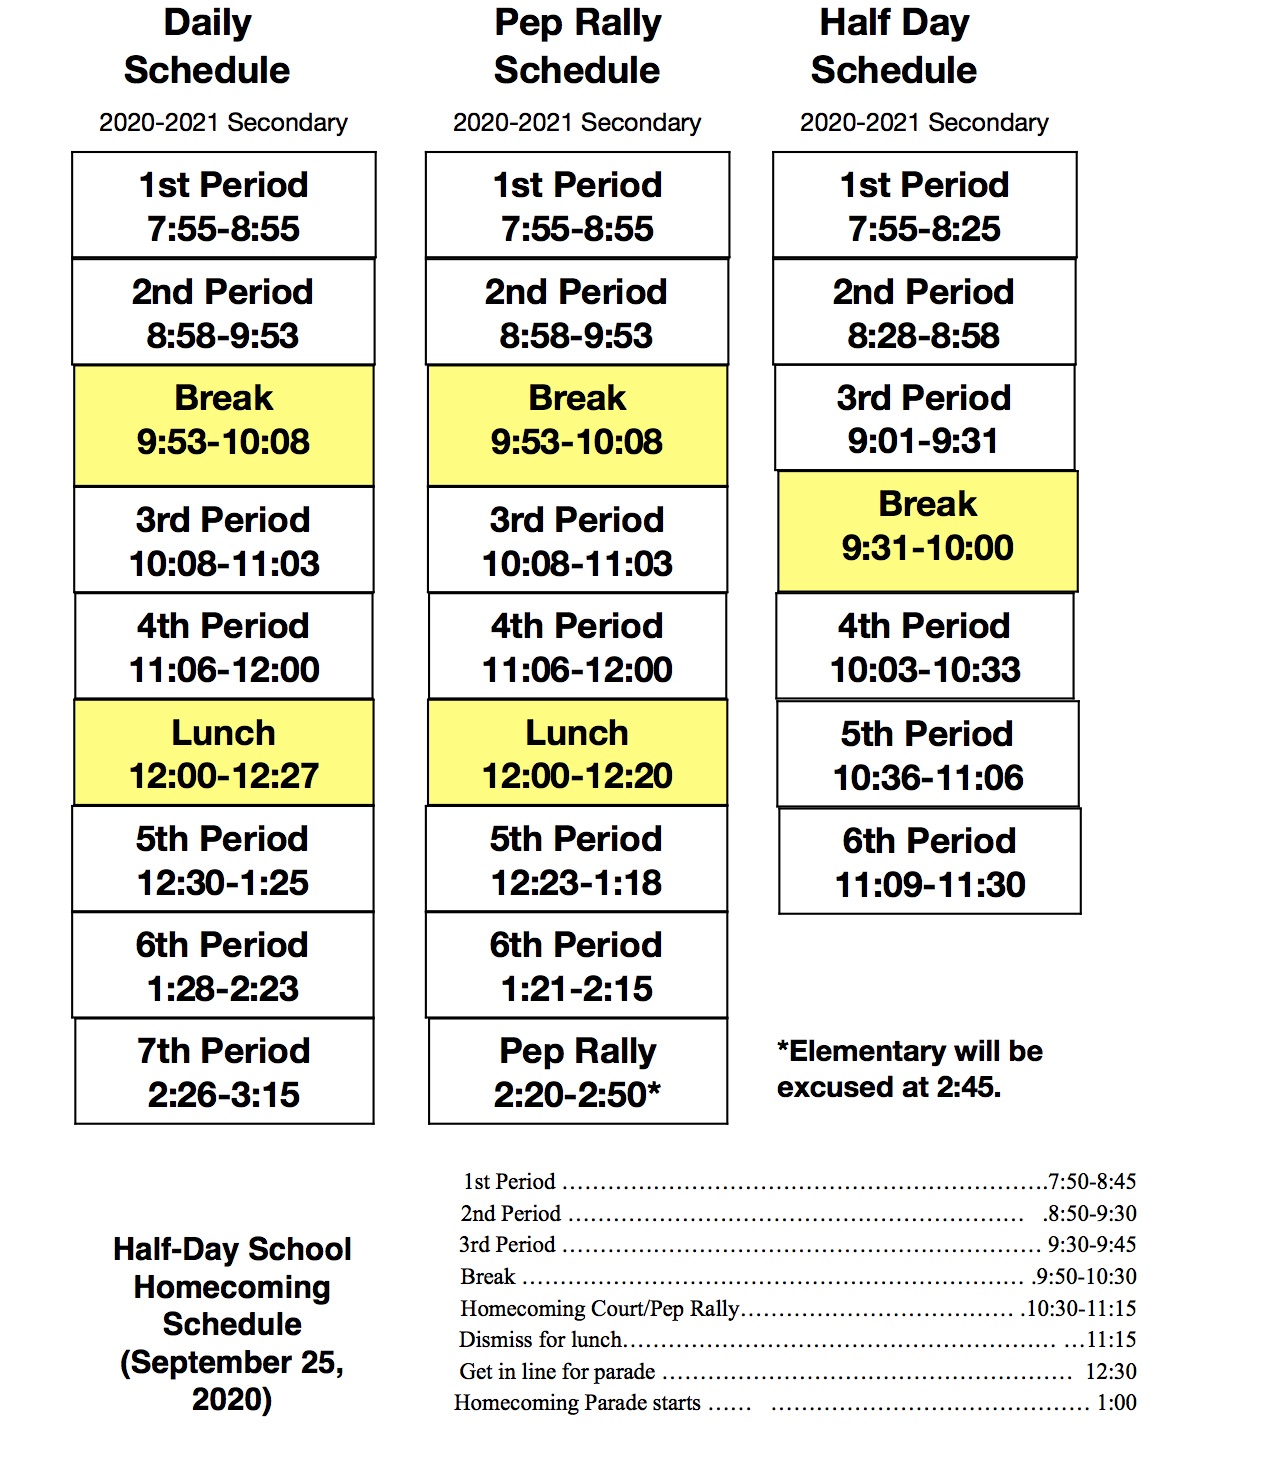 Bell Schedules